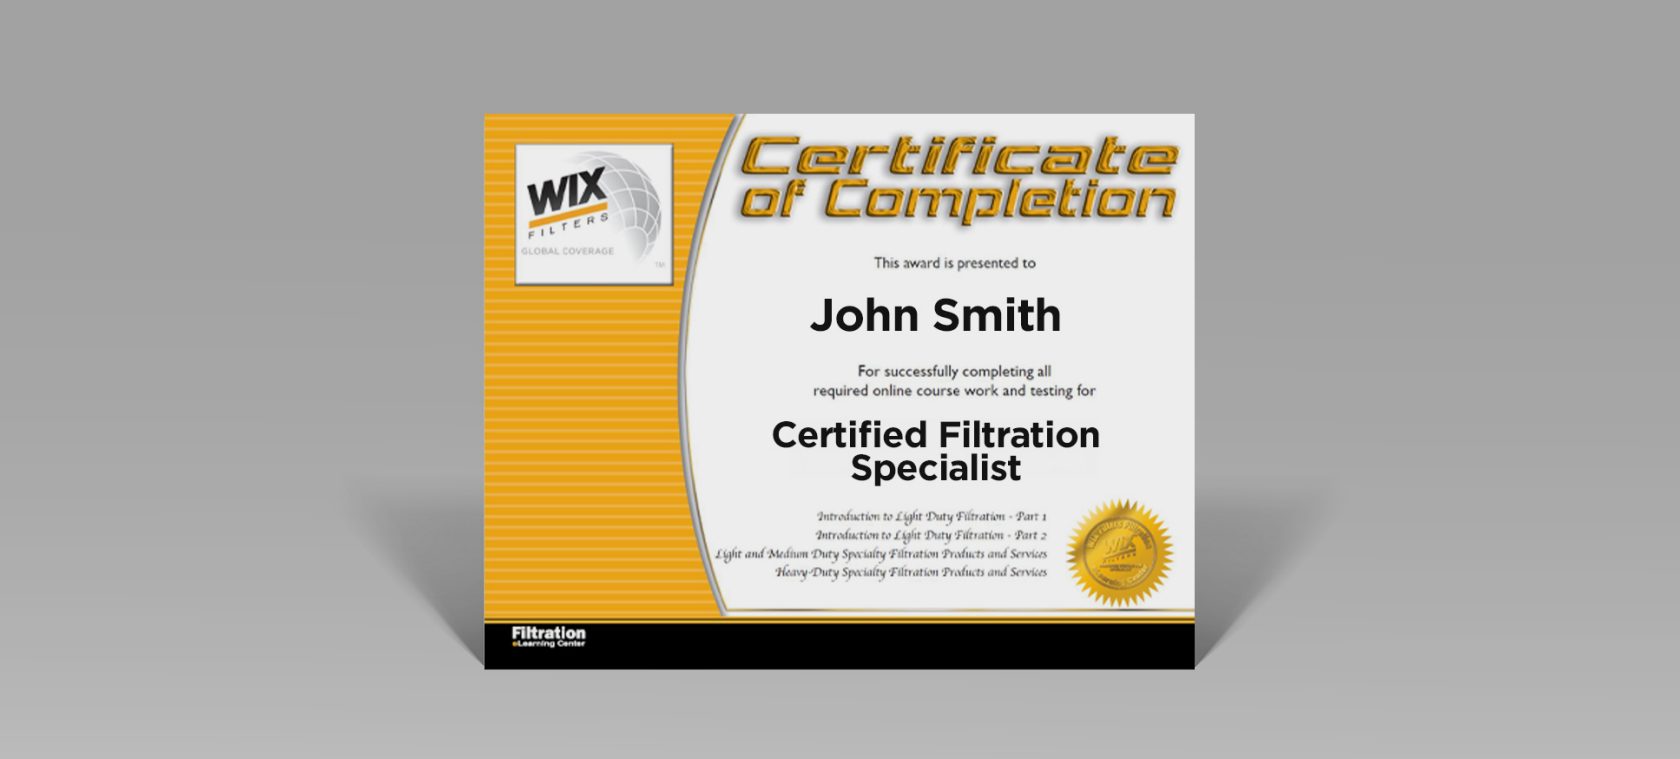 WIX eLearning Certificate